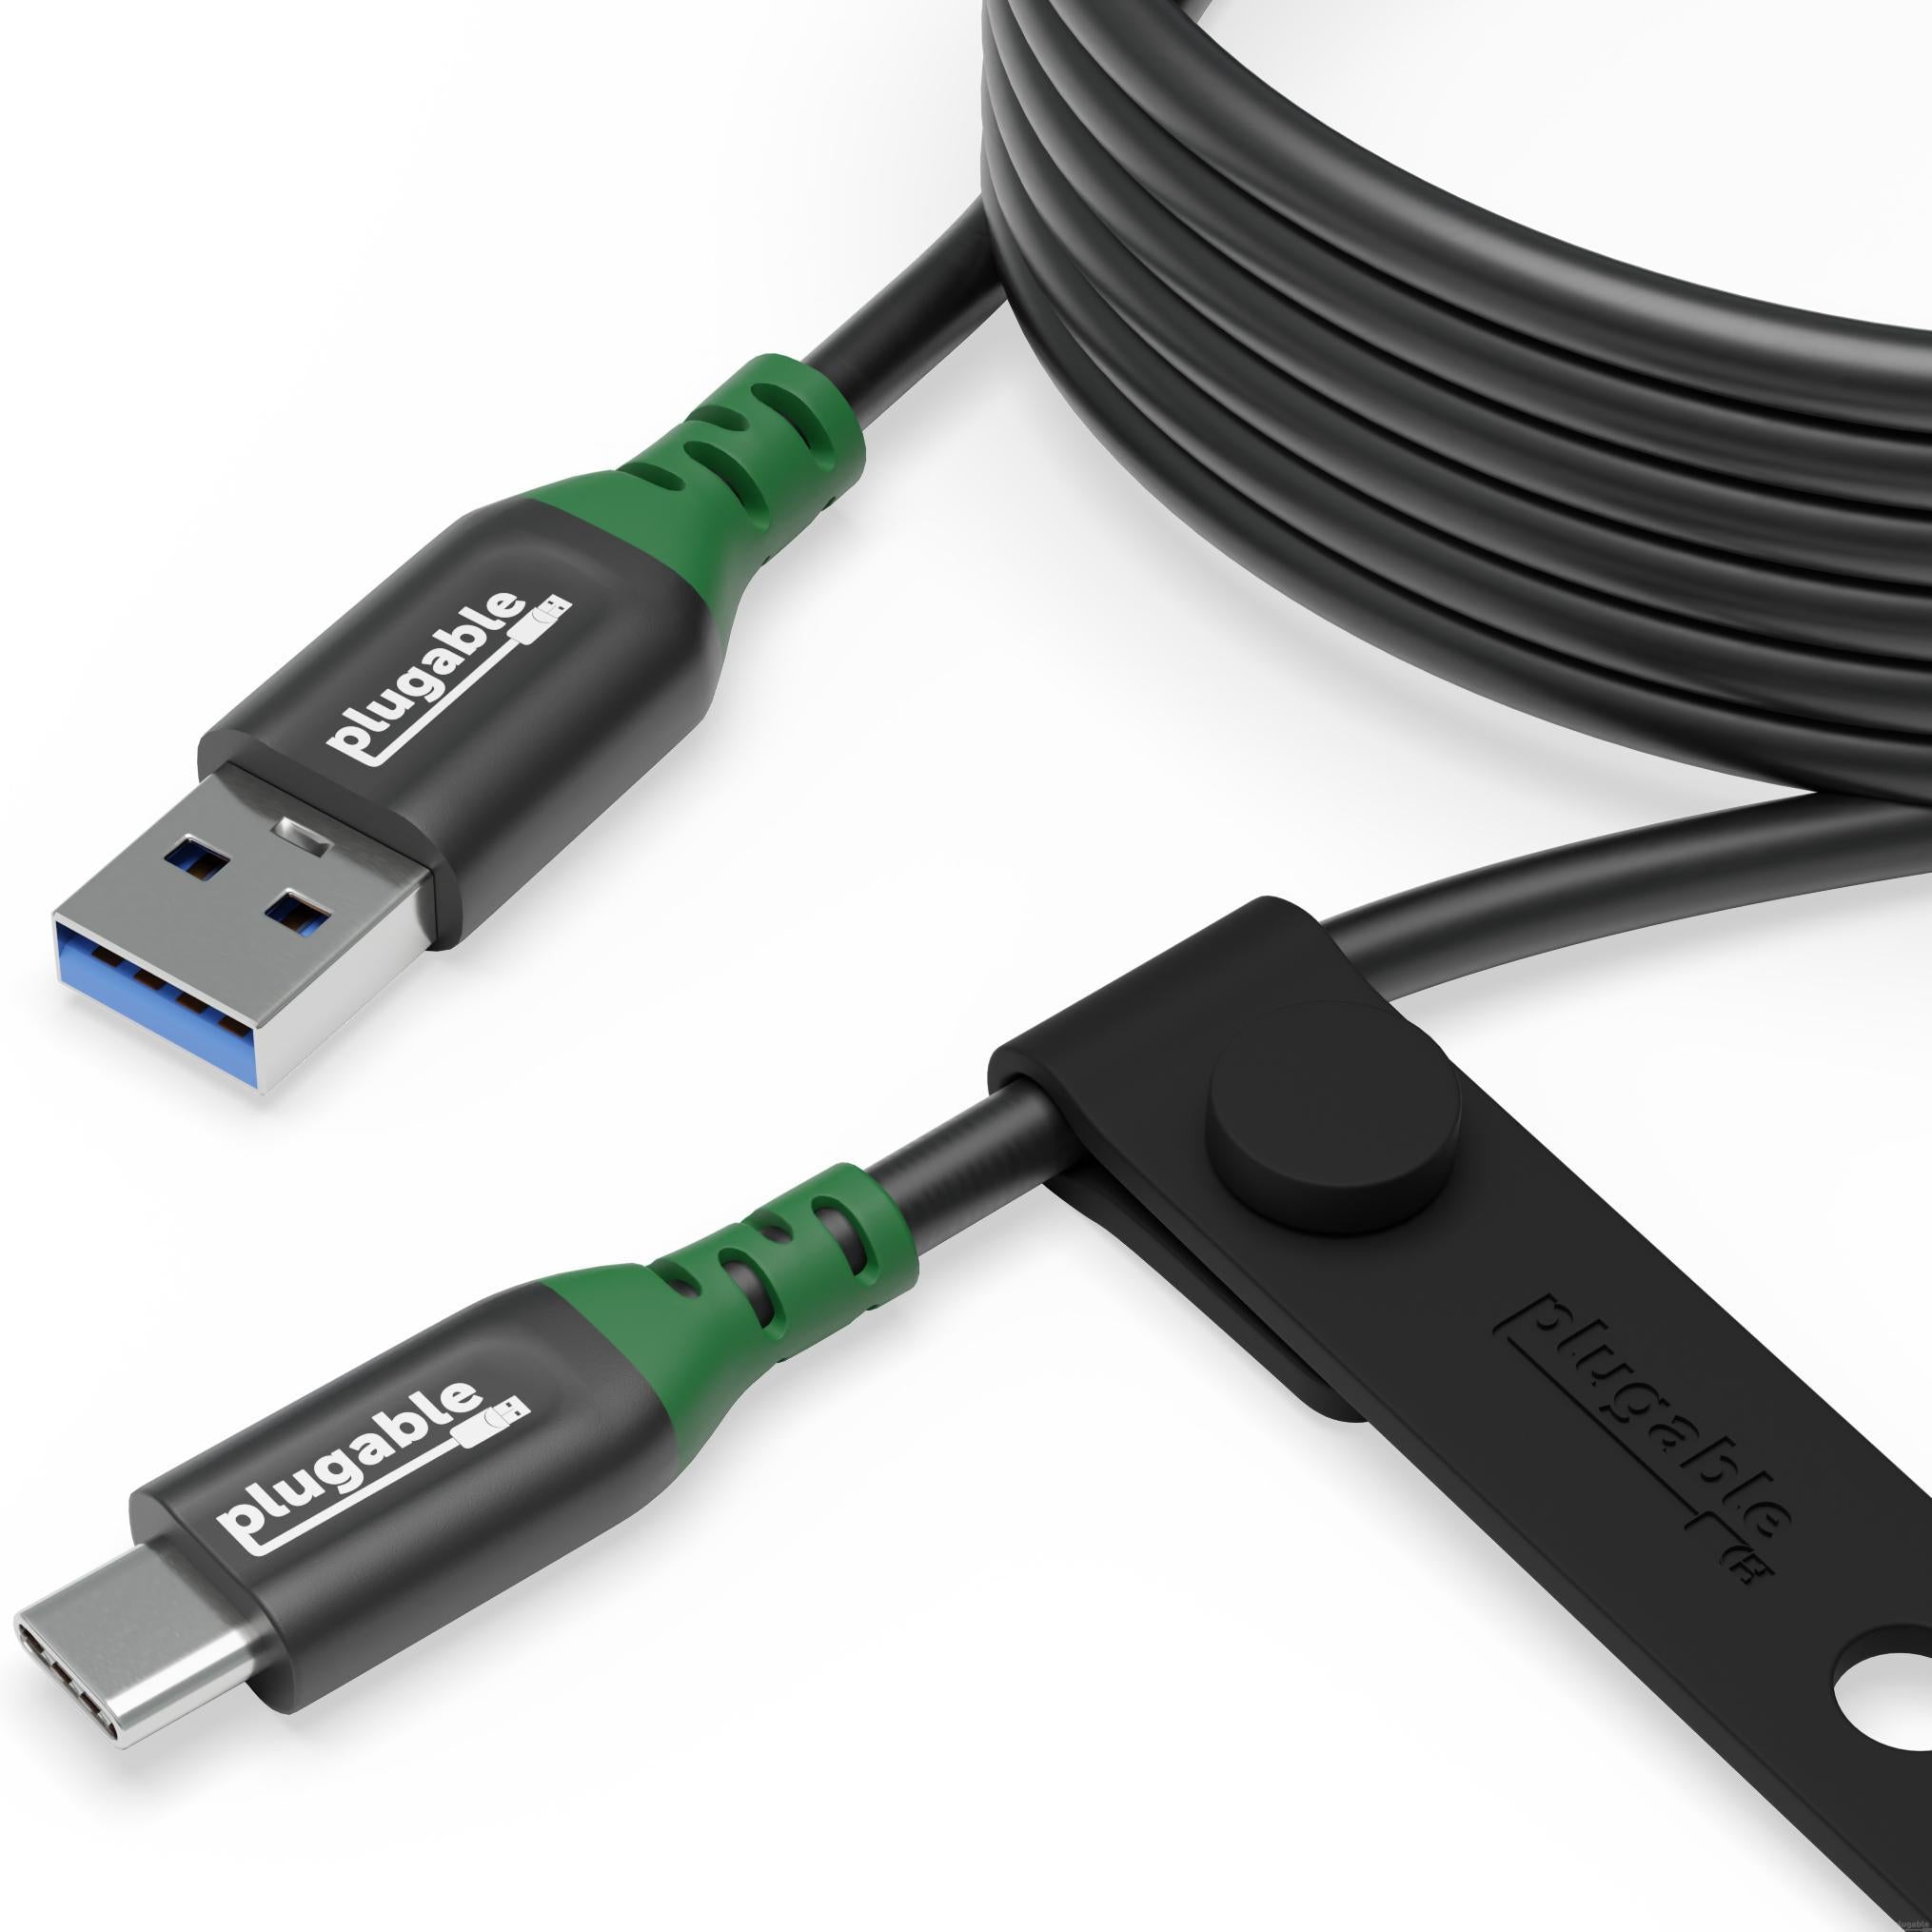 USB Cables – Plugable Technologies